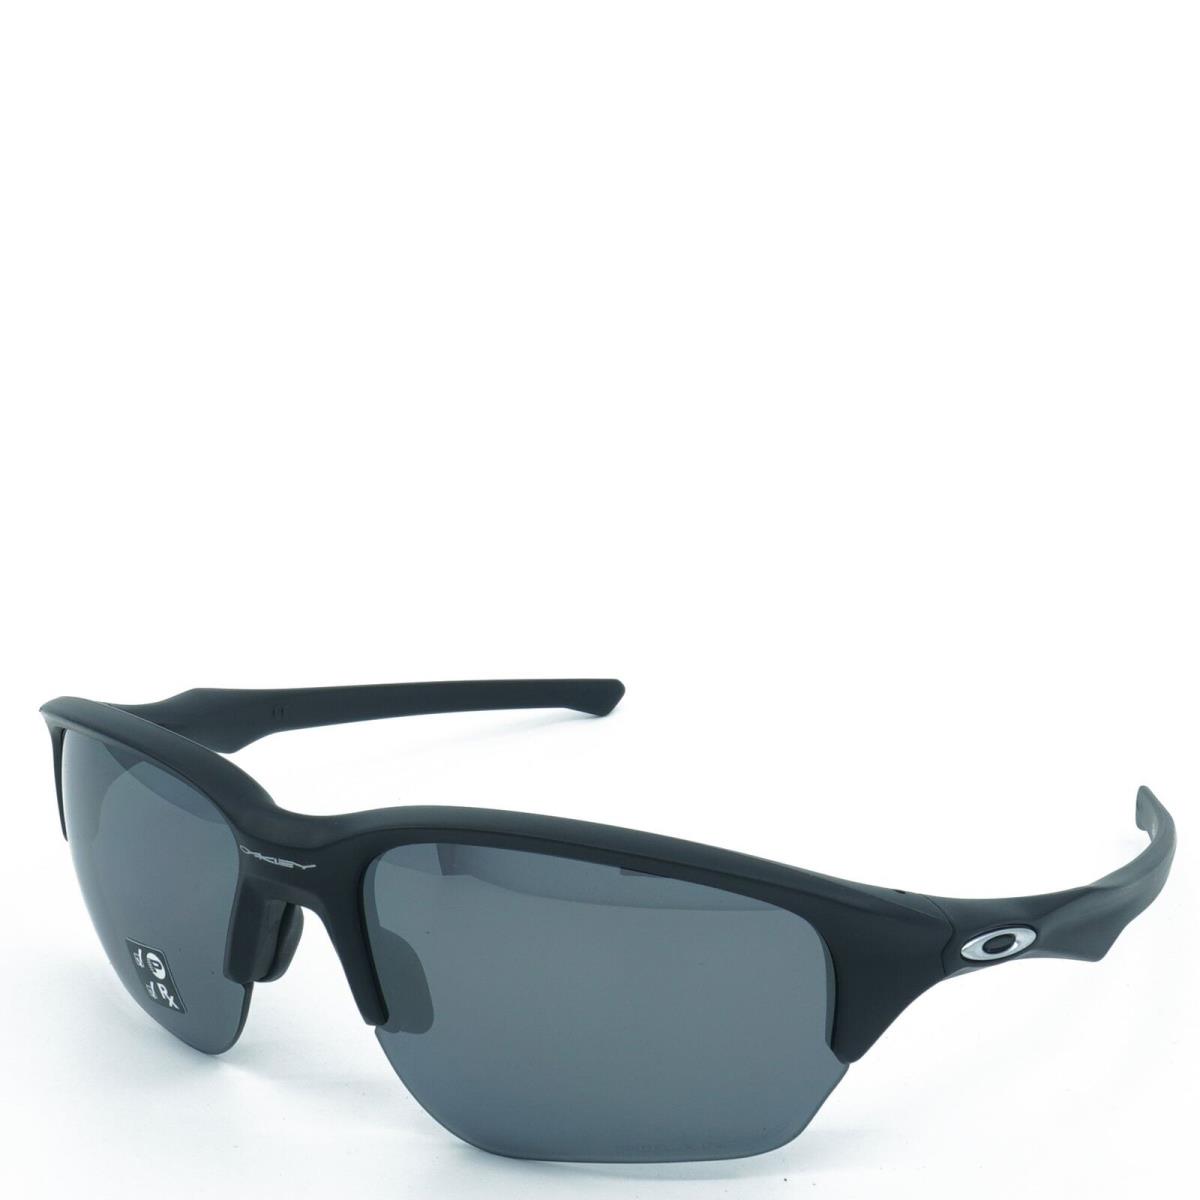 OO9363-12 Mens Oakley Flak Beta Polarized Sunglasses - Frame: Black, Lens: Black